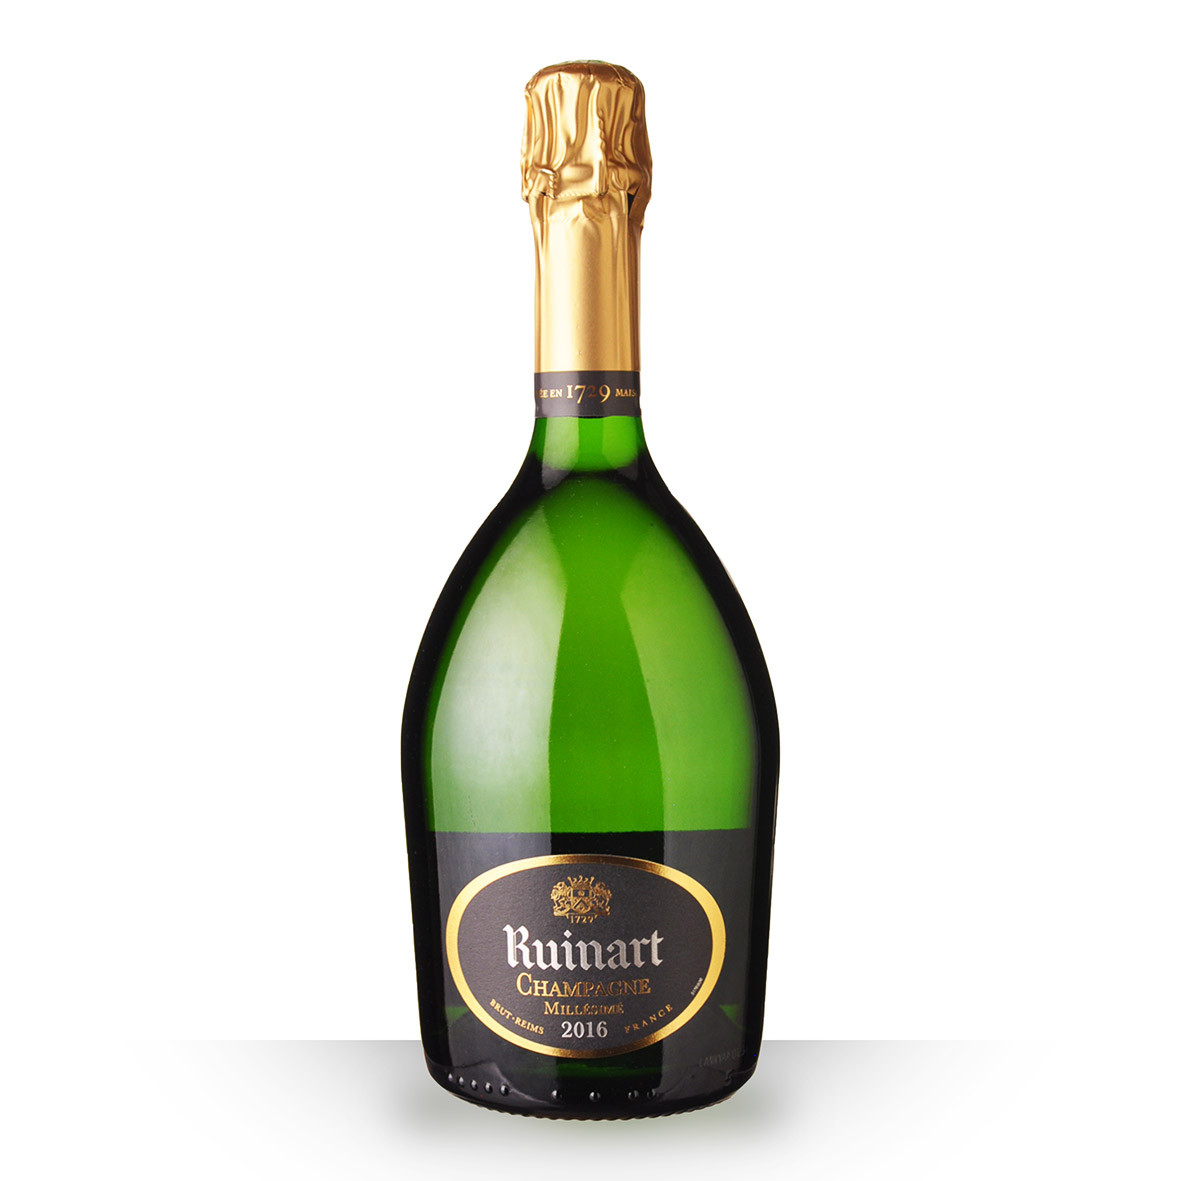 Champagne Ruinart Brut Millésimé 2016 75cl www.odyssee-vins.com